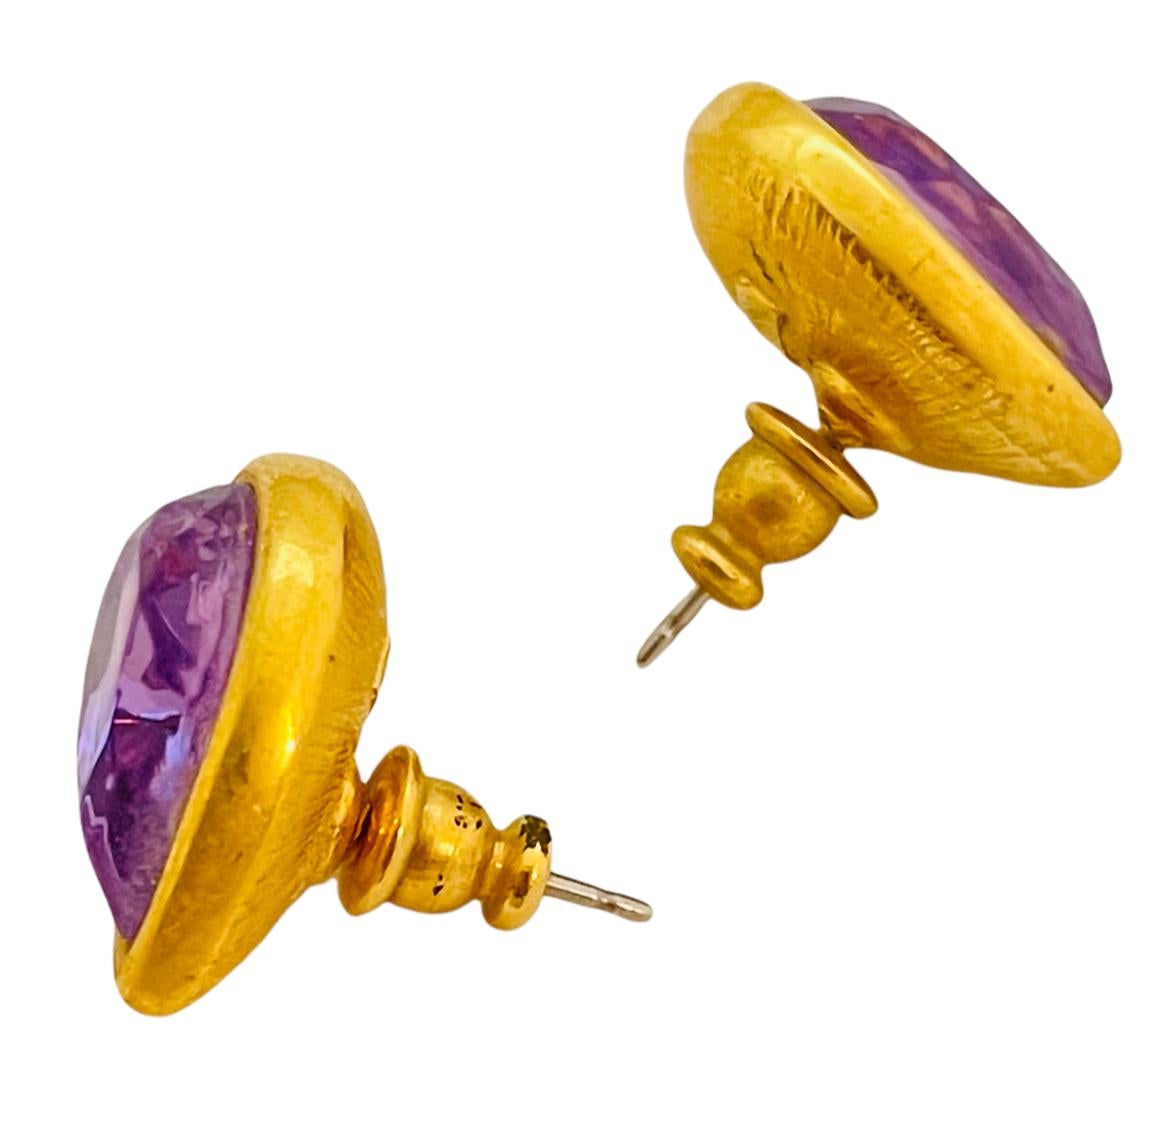 DETAILS

• signed TRIFARI TM

• gold tone with large tear shape crystals

• vintage designer runway earrings

MEASUREMENTS

• 1